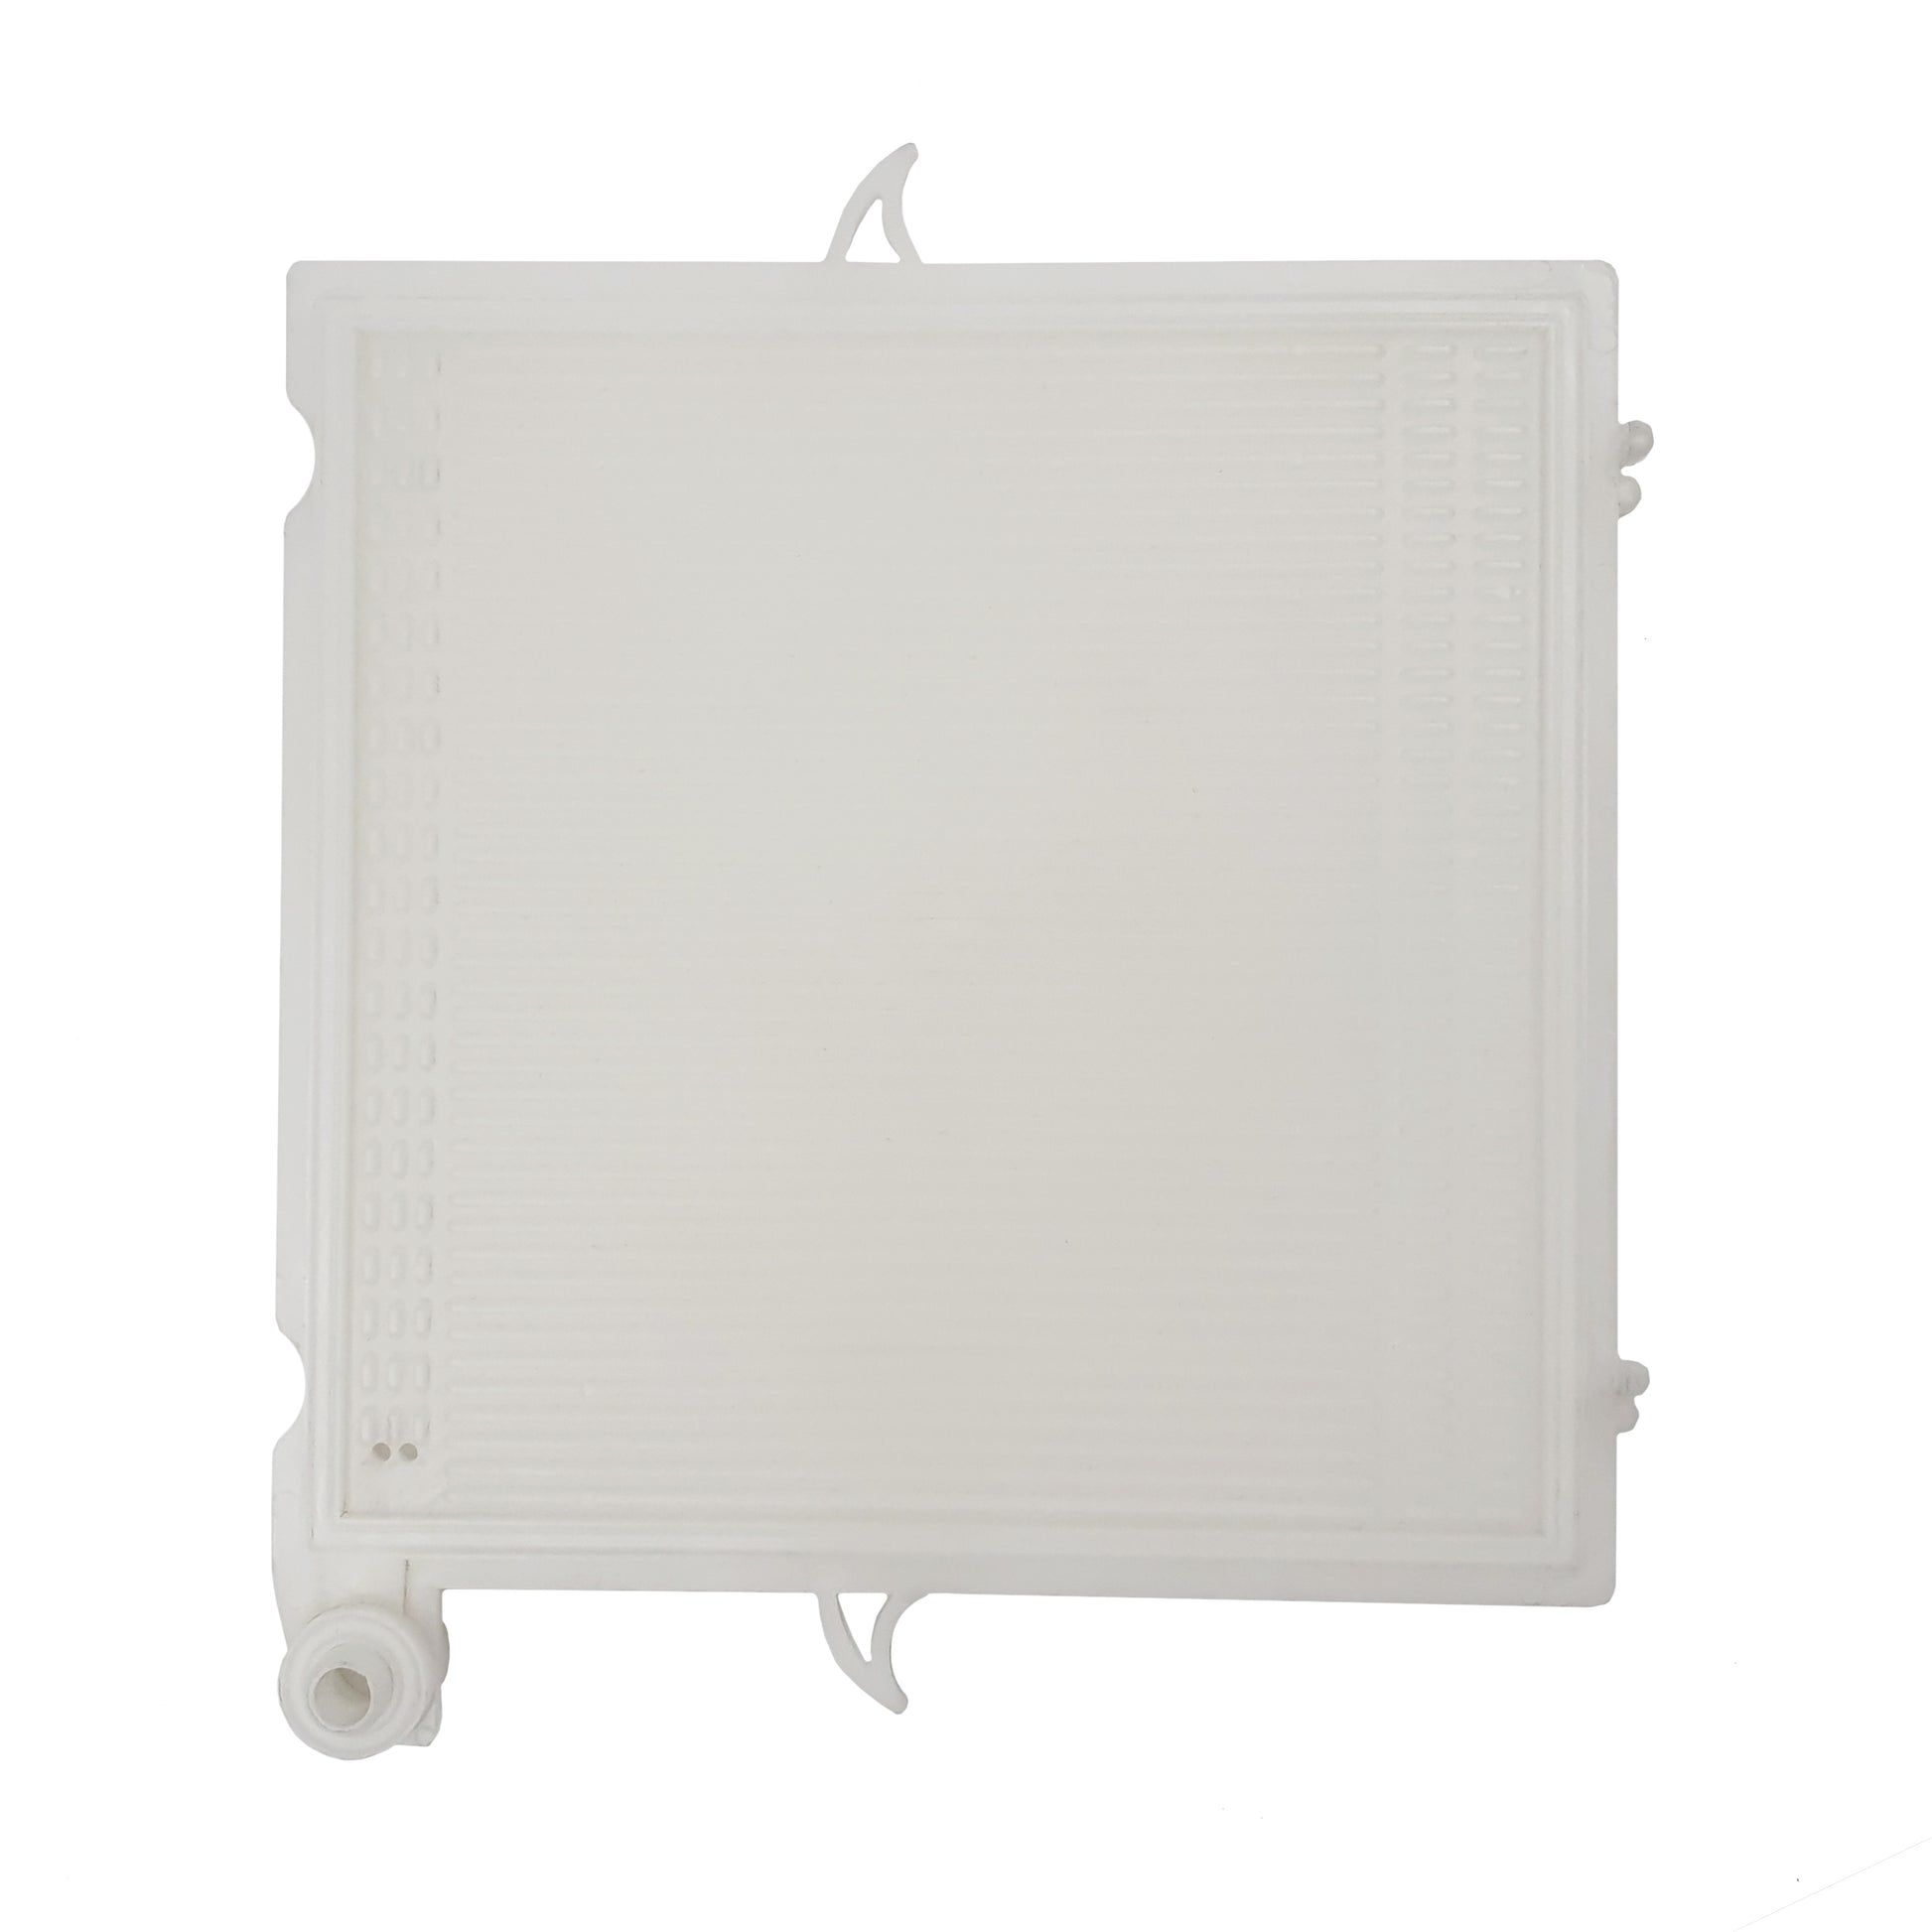 White plastic frame for the Filter Rover Colombo. 